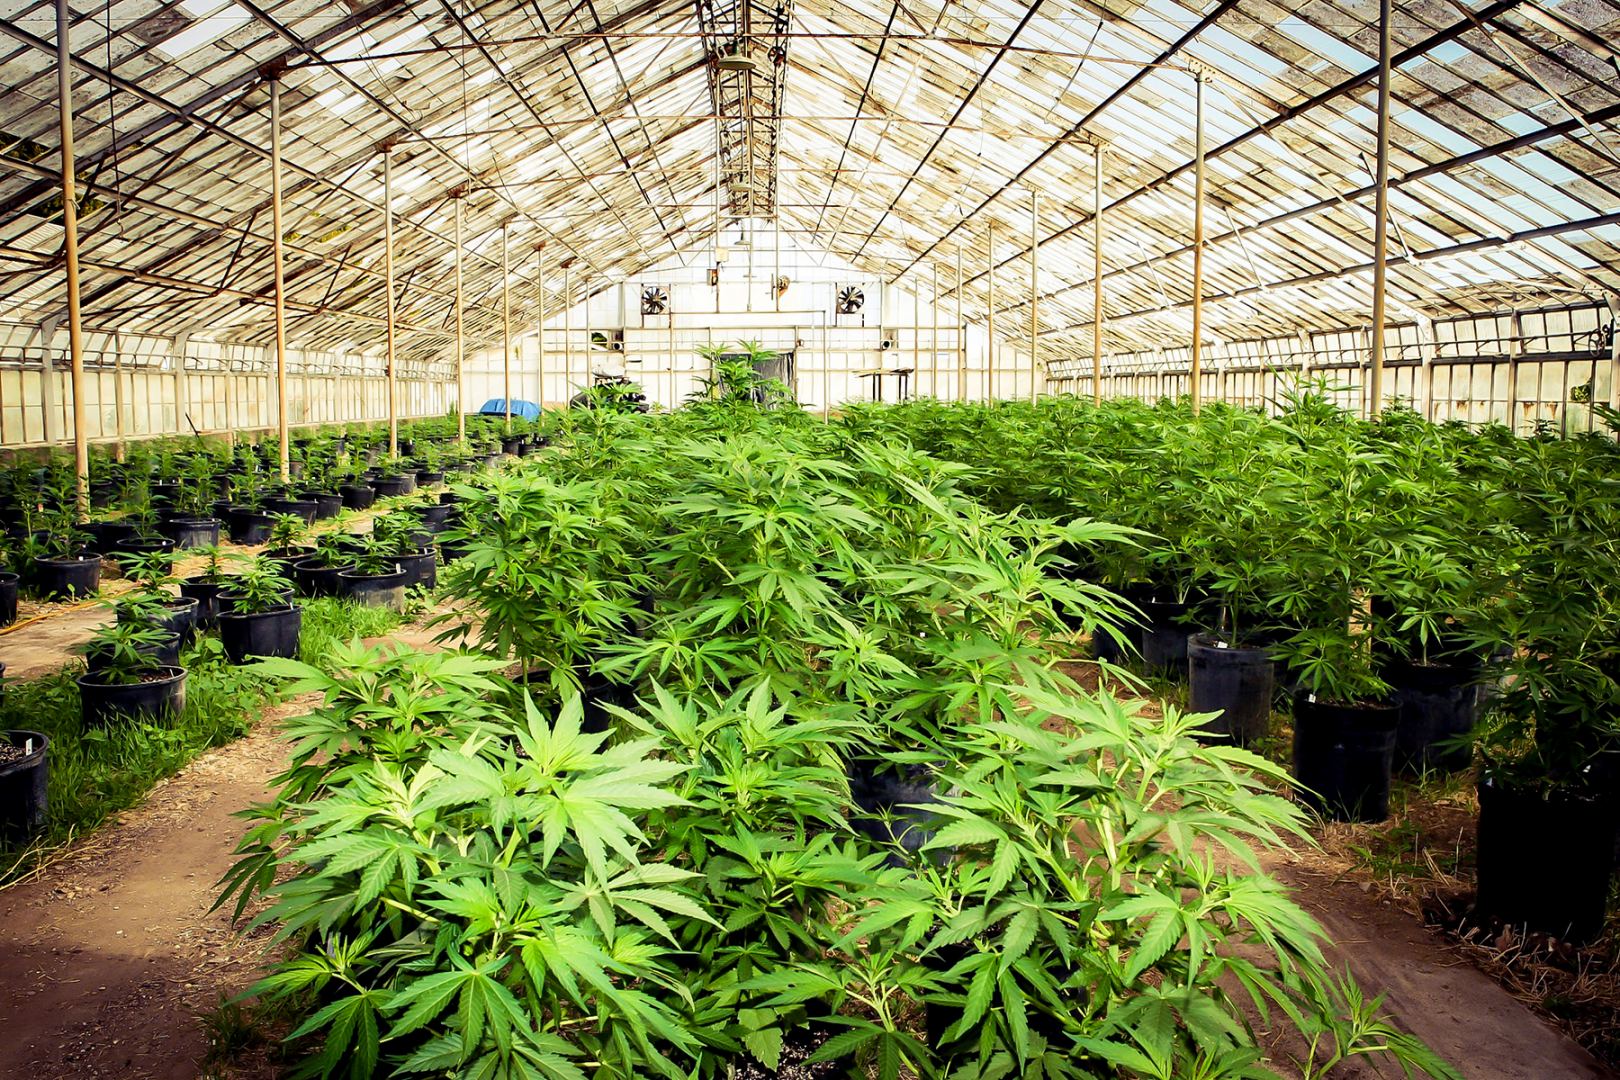 Morocco seizes 1.5 tonnes of cannabis